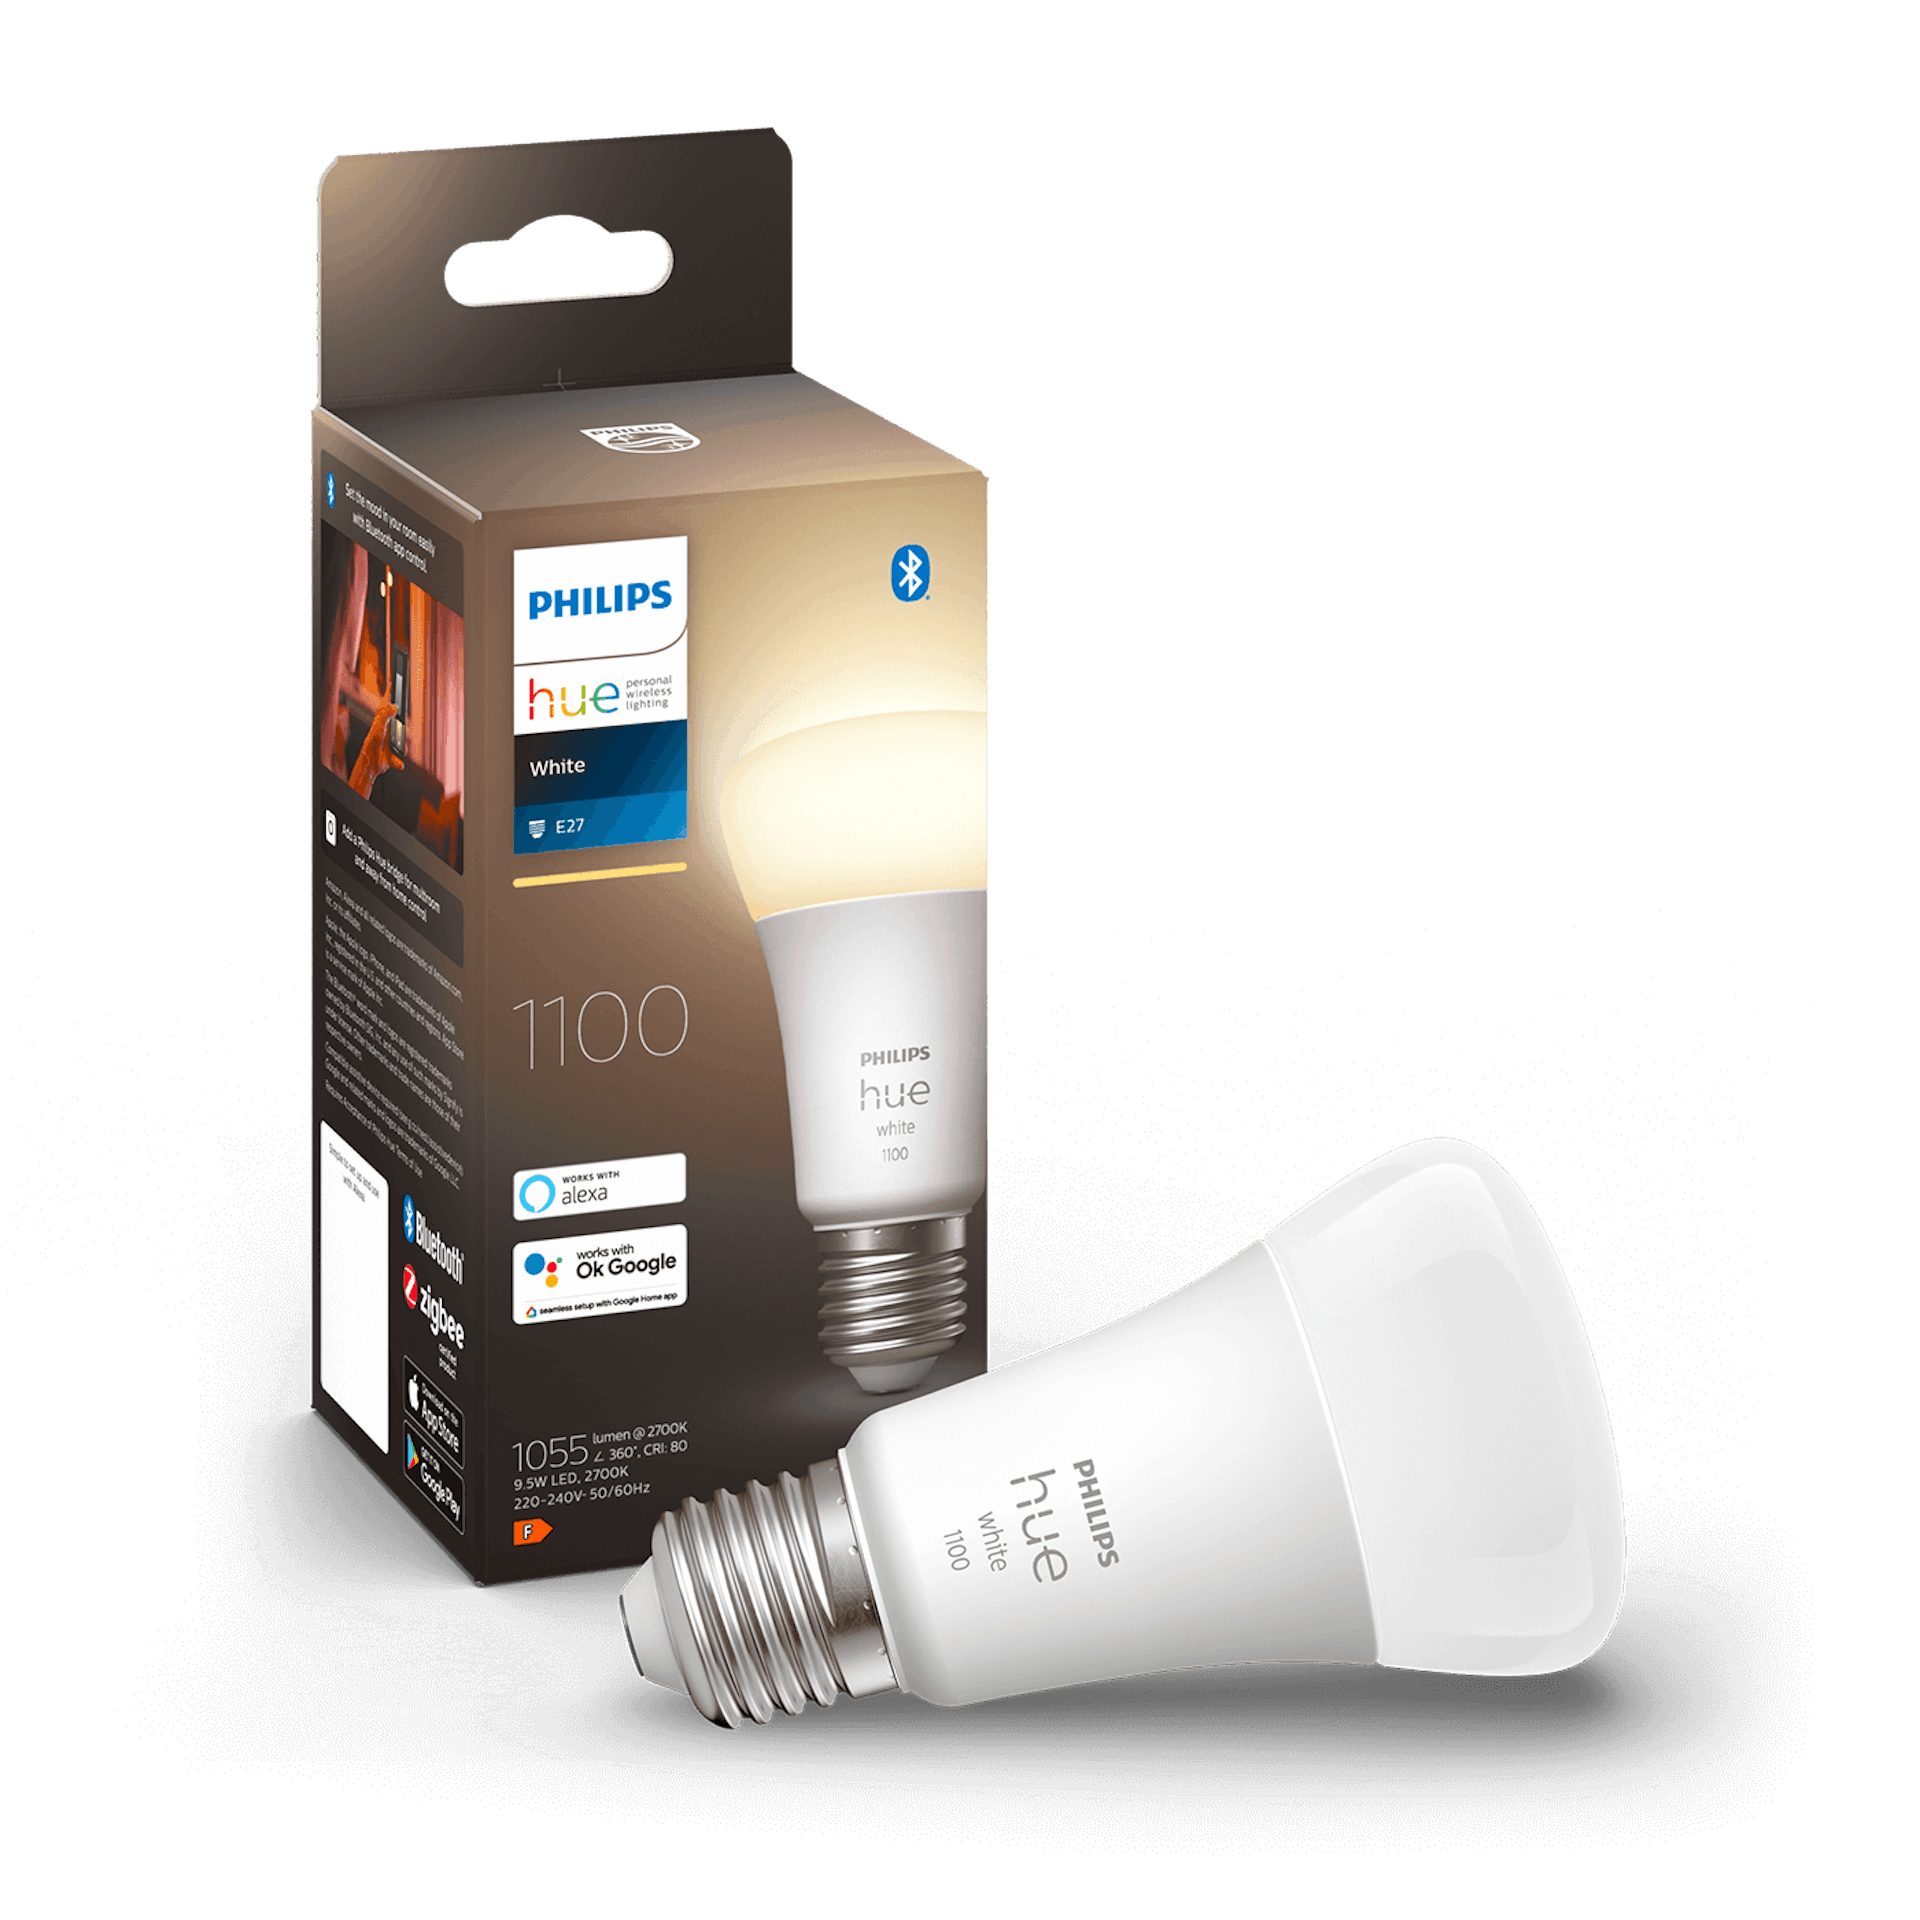 Philips Hue White E27 (G2) - Details - Packaging image